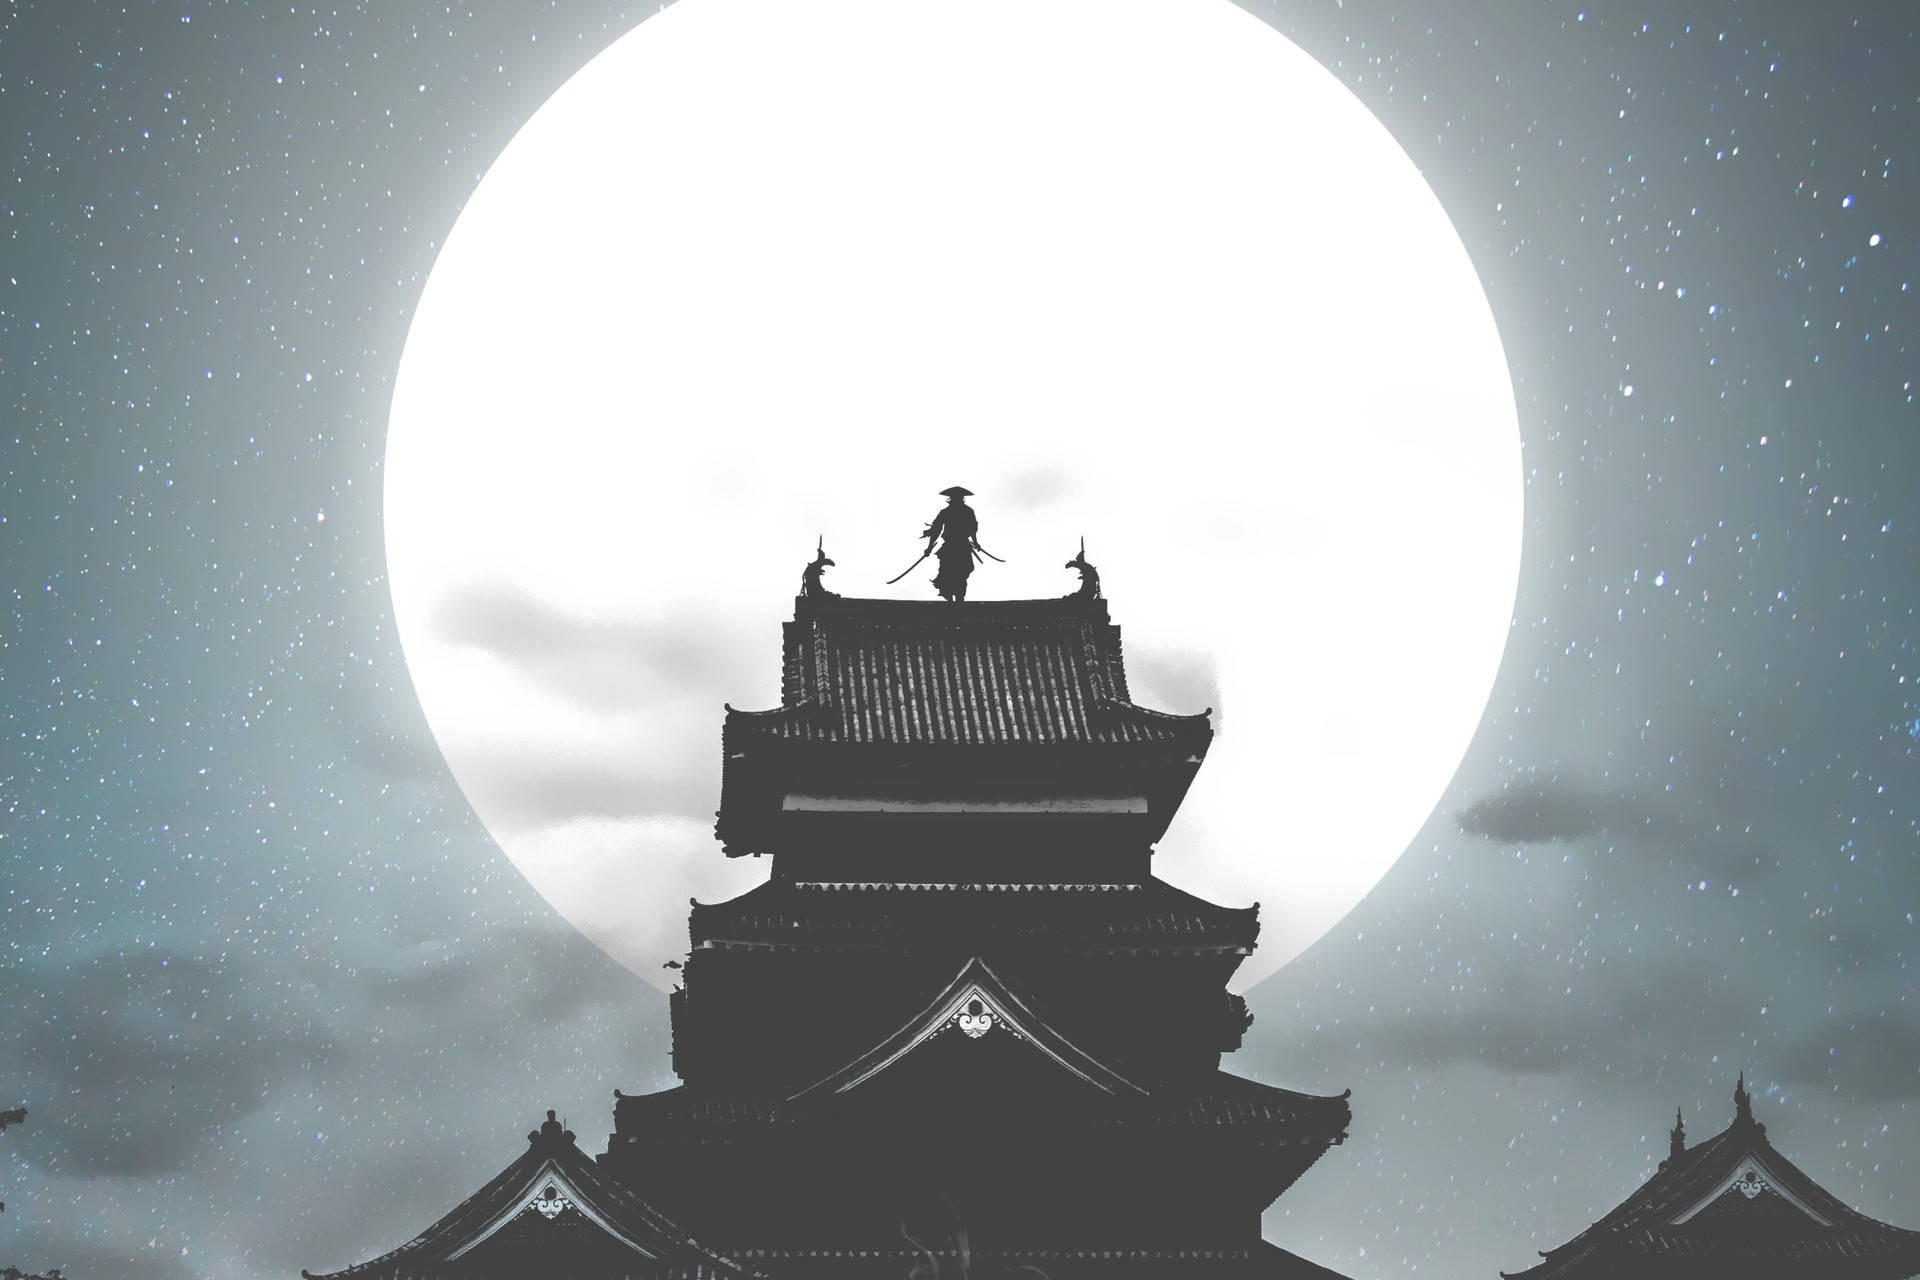 "A Warrior Under The Moonlight" Wallpaper